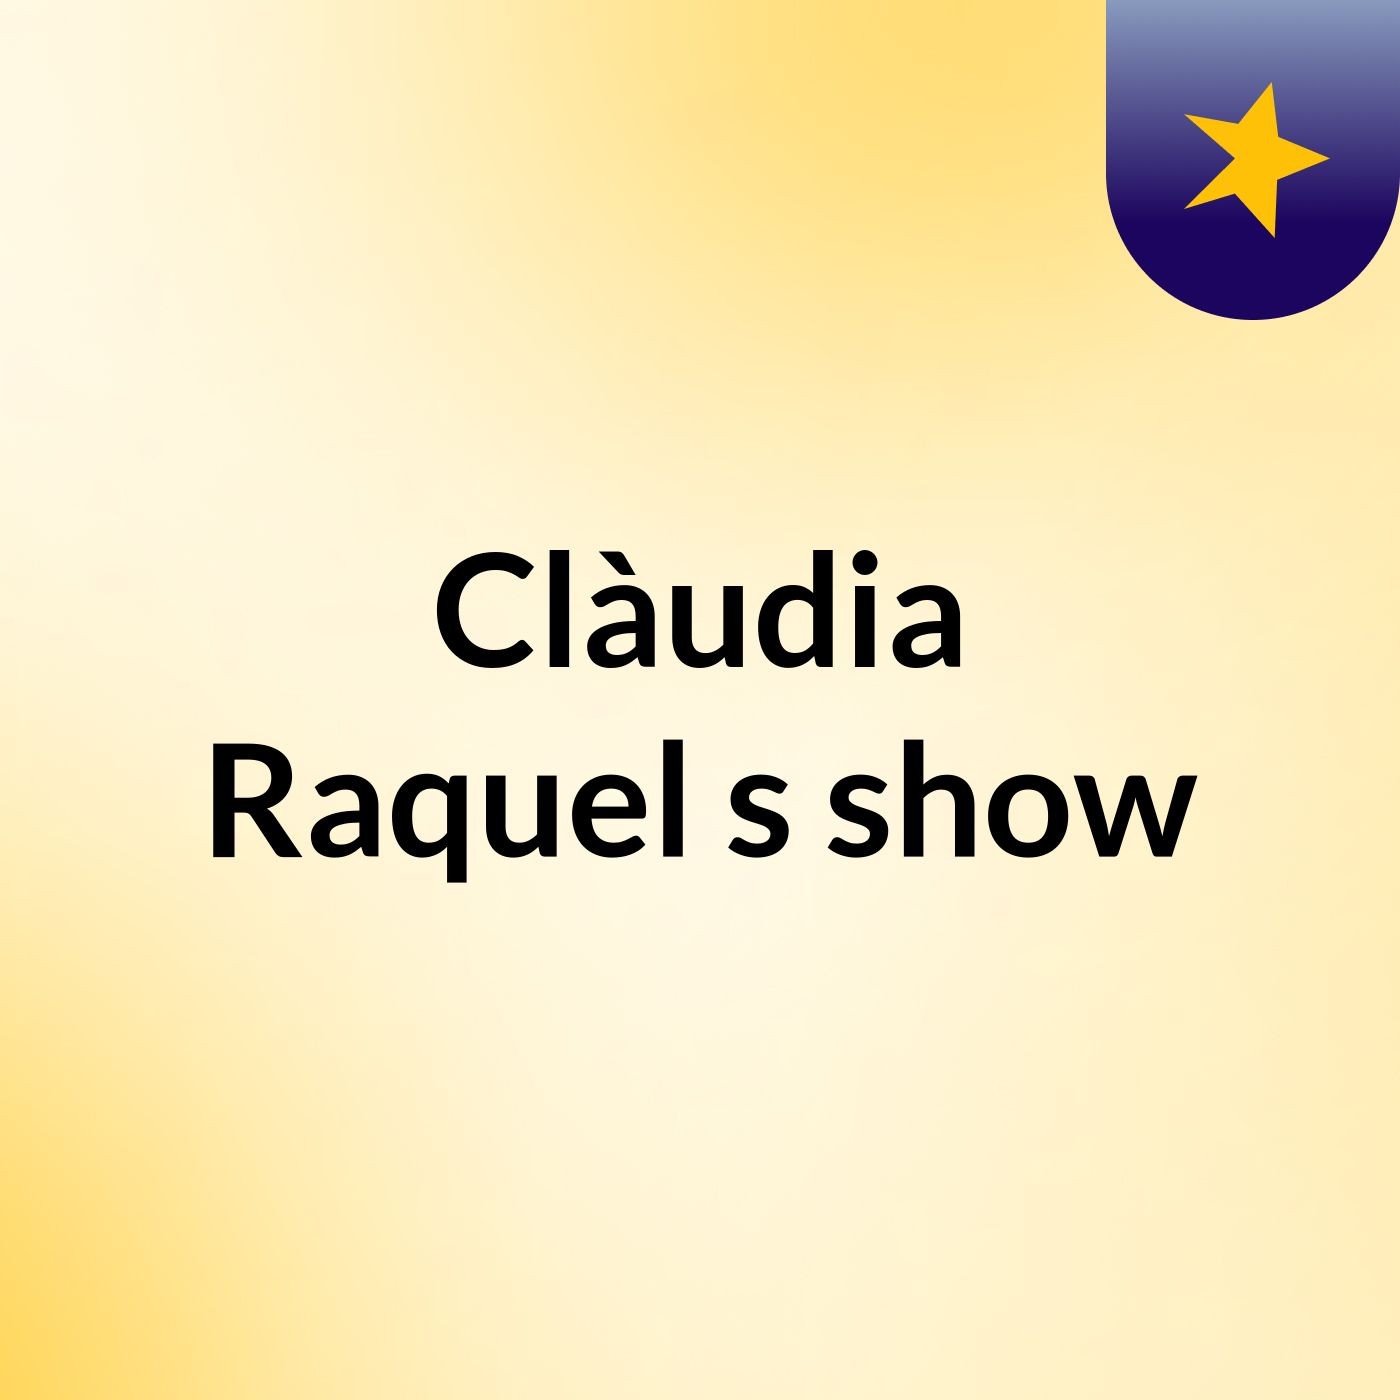 Clàudia Raquel's show